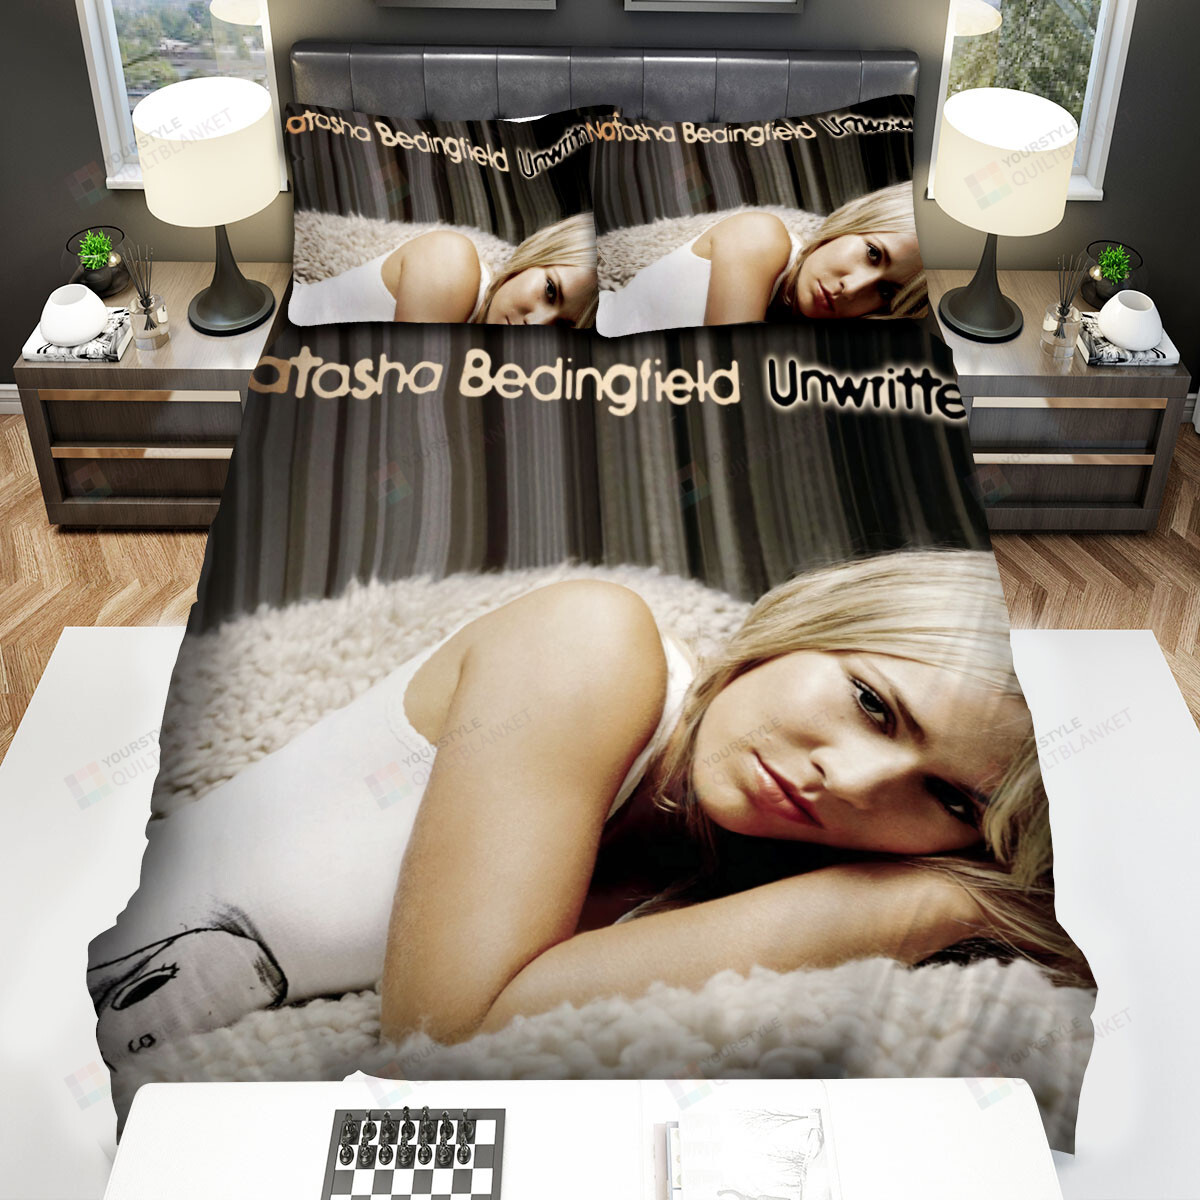 Natasha Bedingfield Unwritten Artwork Bed Sheets Spread Comforter Duvet Cover Bedding Sets